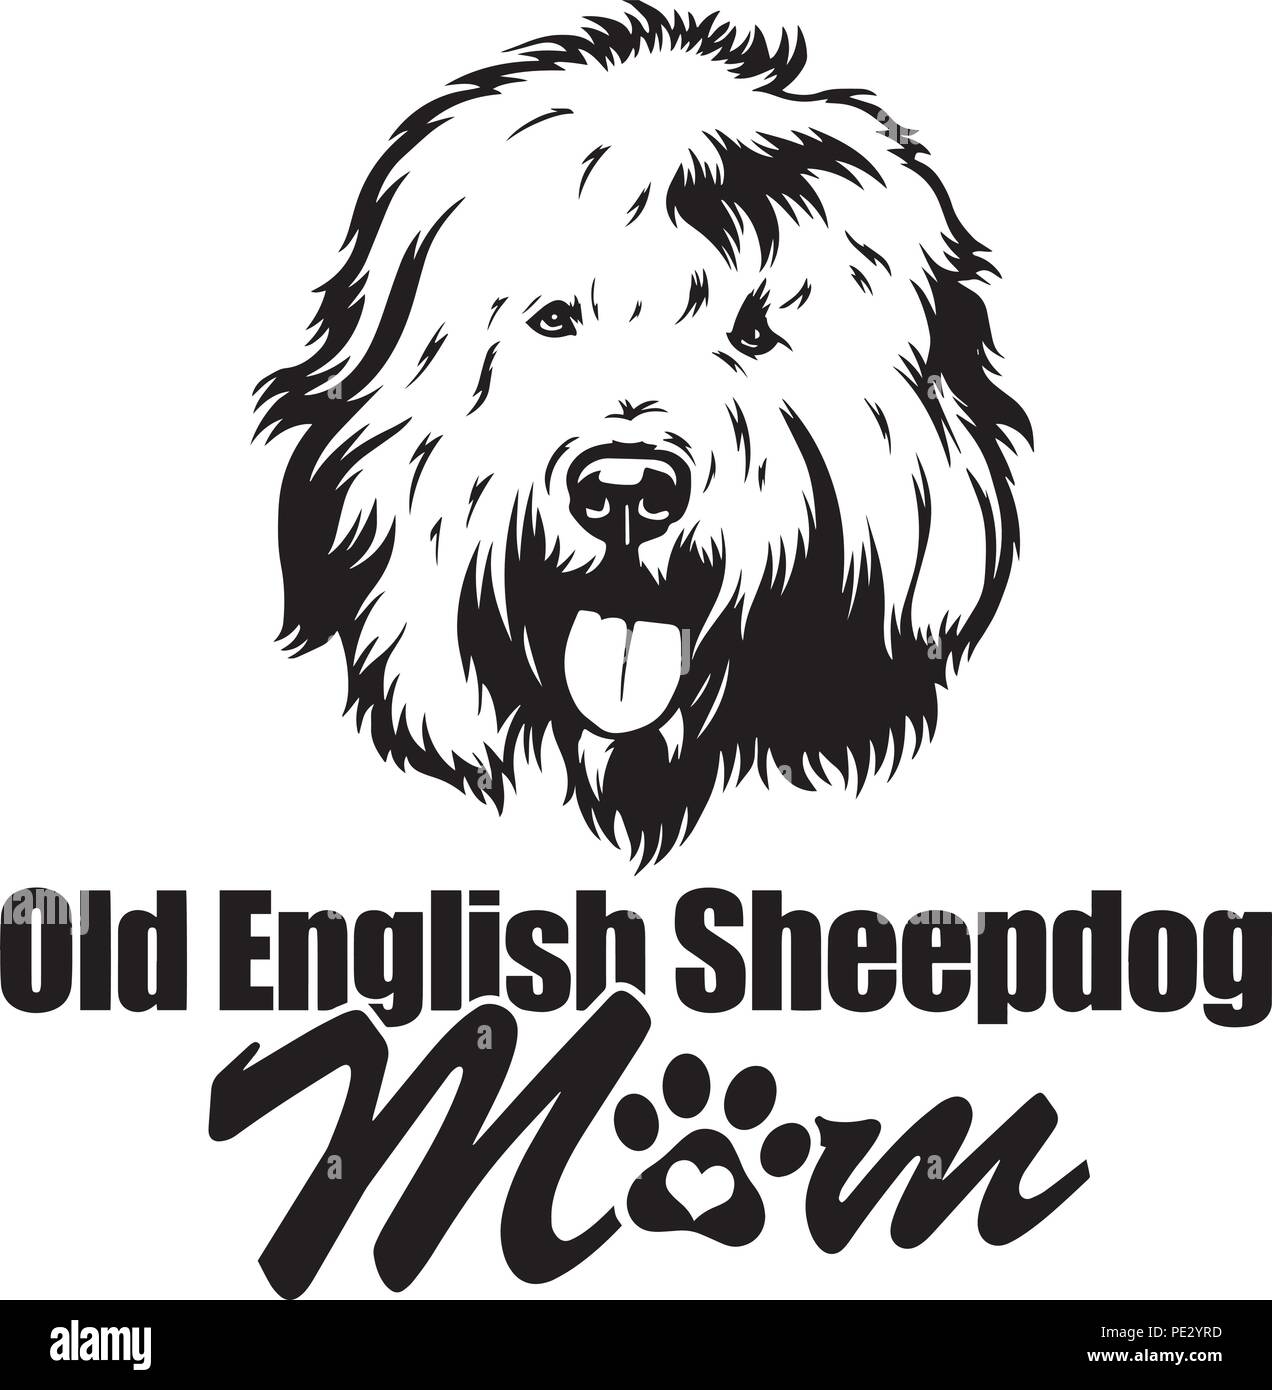 Pastor Ovejero Ingles o Old English Sheepdog. El Viejo Perro